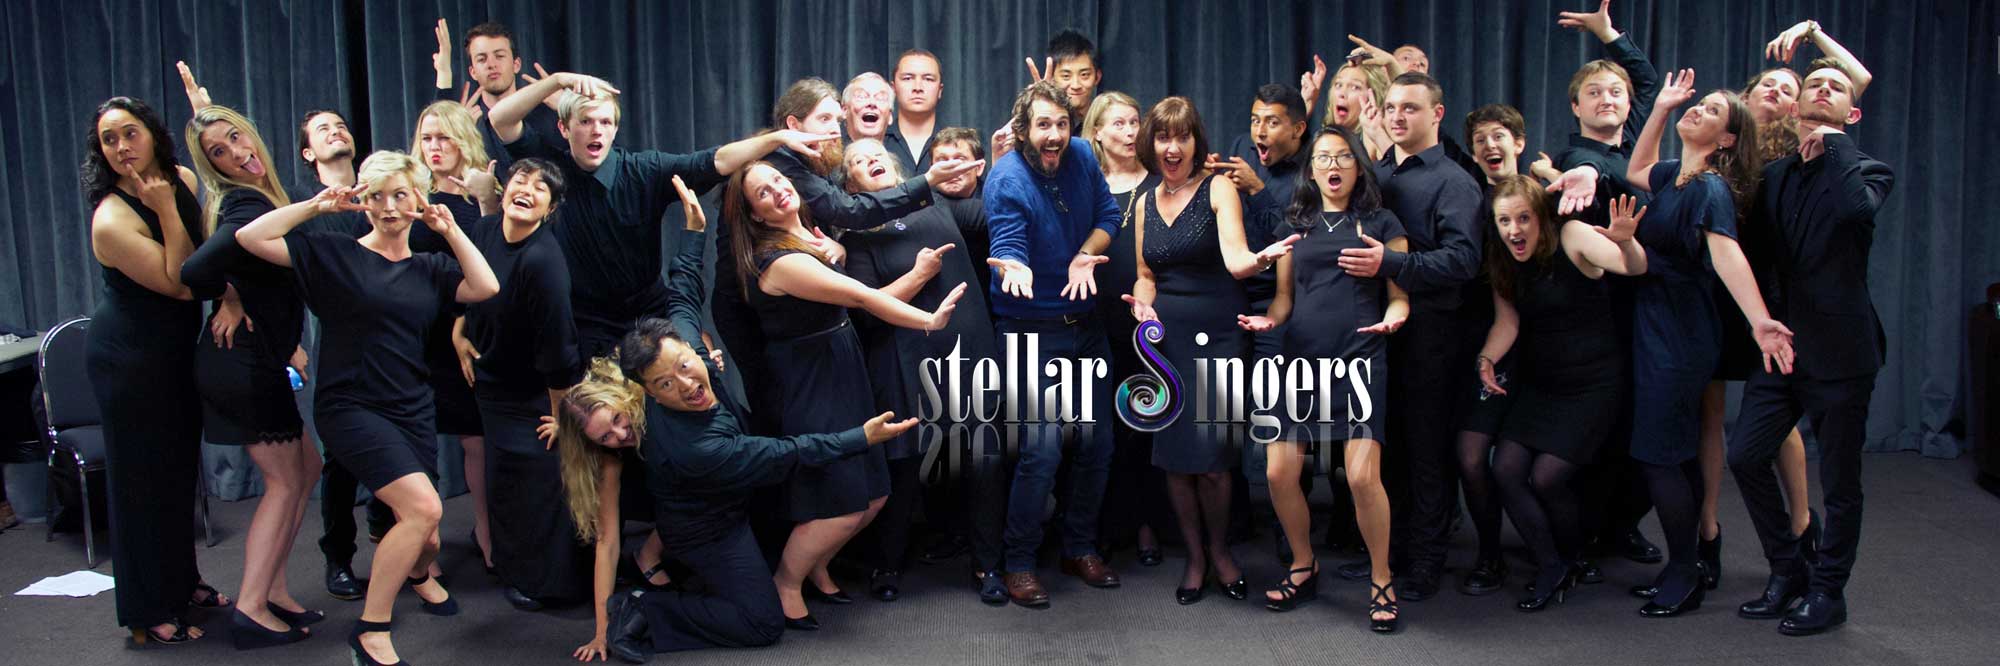 Stellar Singers